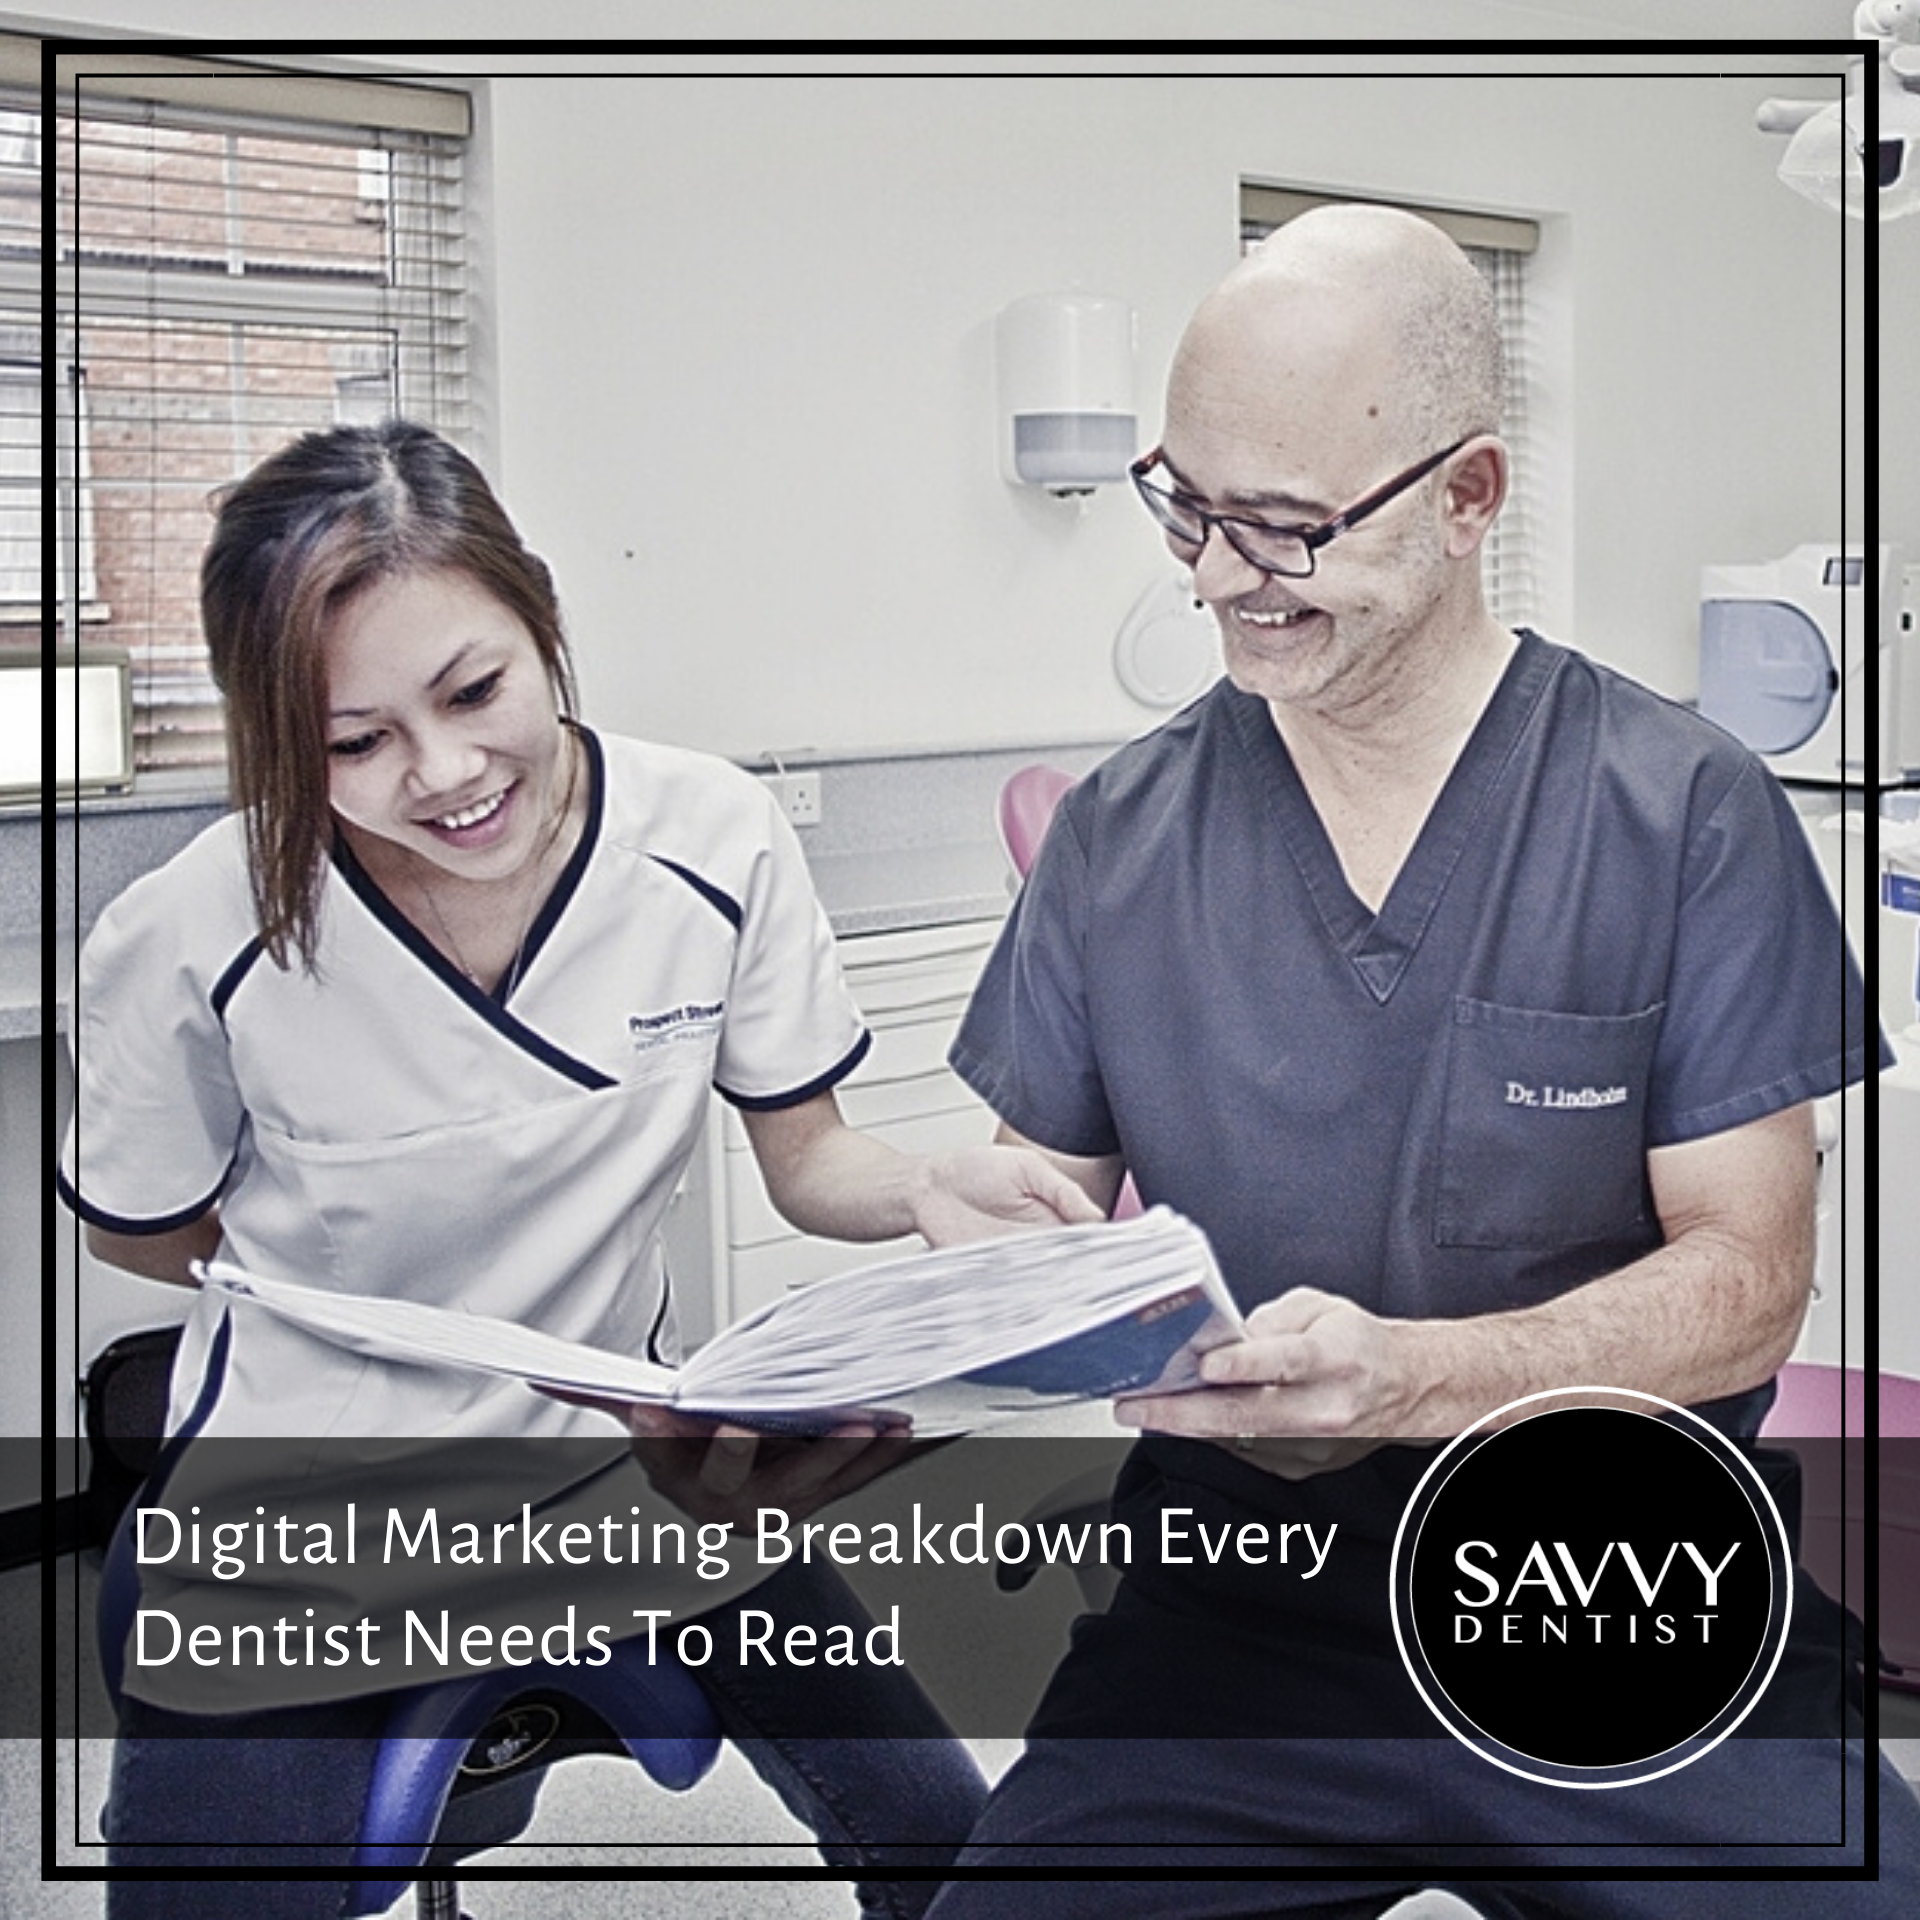 Digital Marketing Breakdown Every Dentist Needs To Read